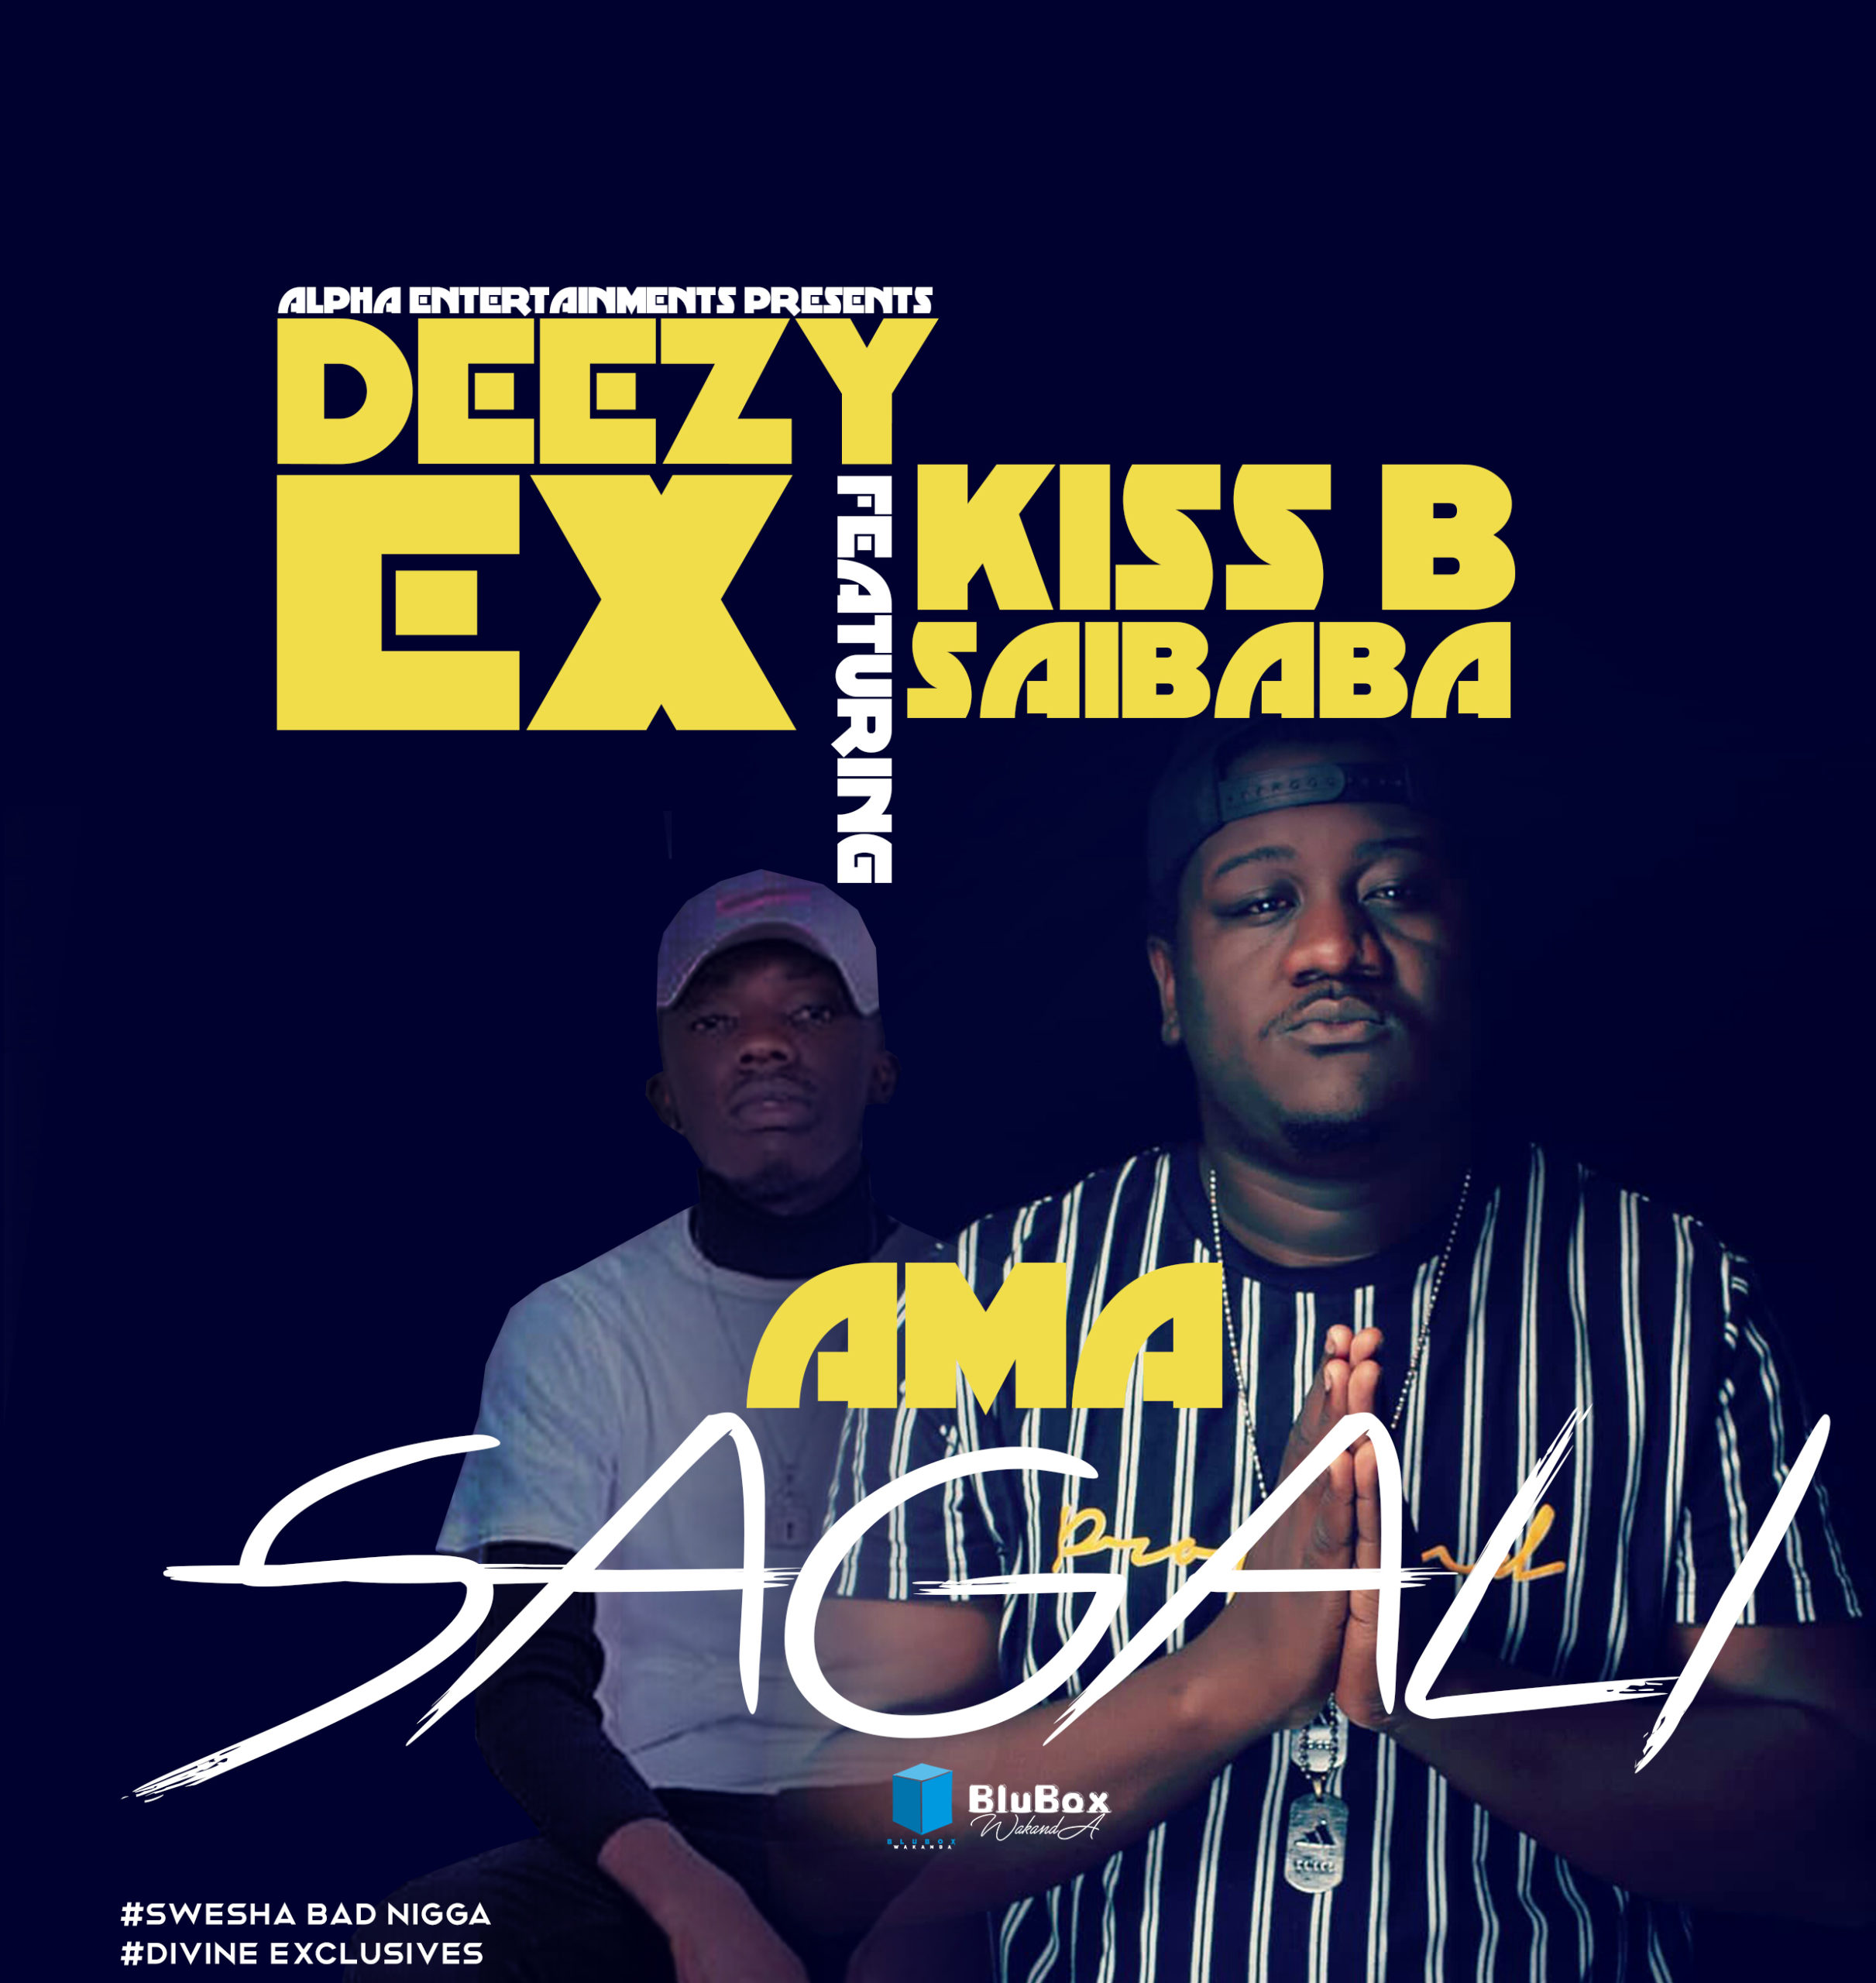 Deezy Ex ft. Kiss B Sai Baba – “Amasagali”